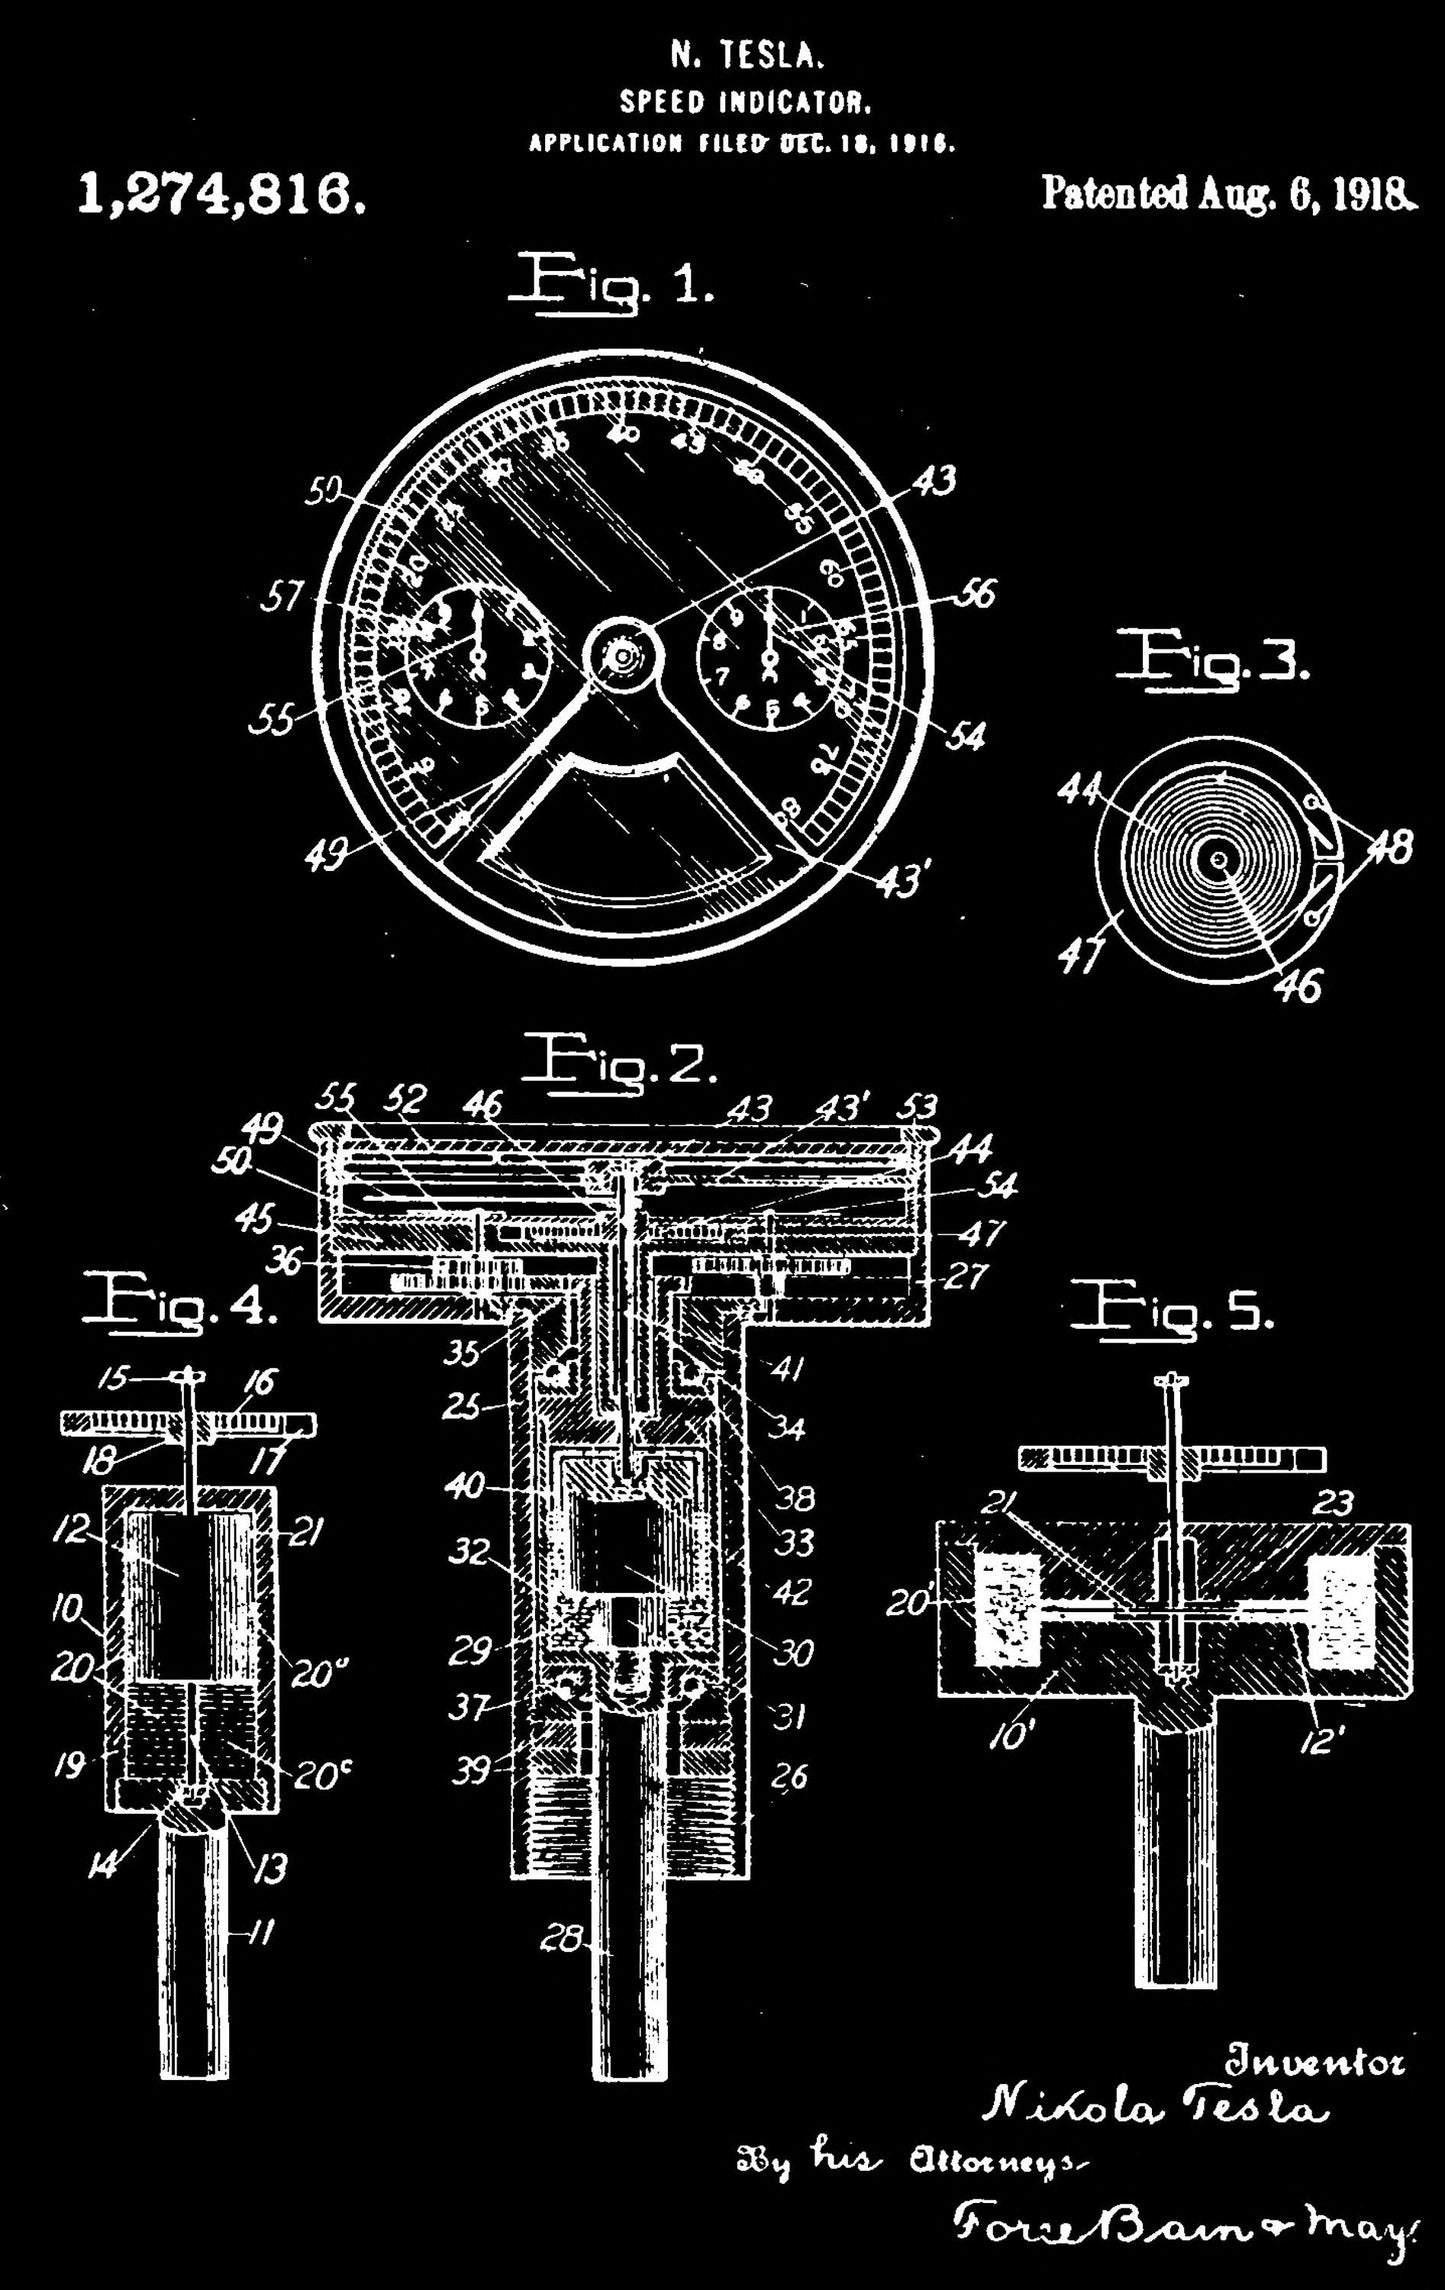 Nikola Tesla Engineering Patents & Inventions Black 126 [Images]